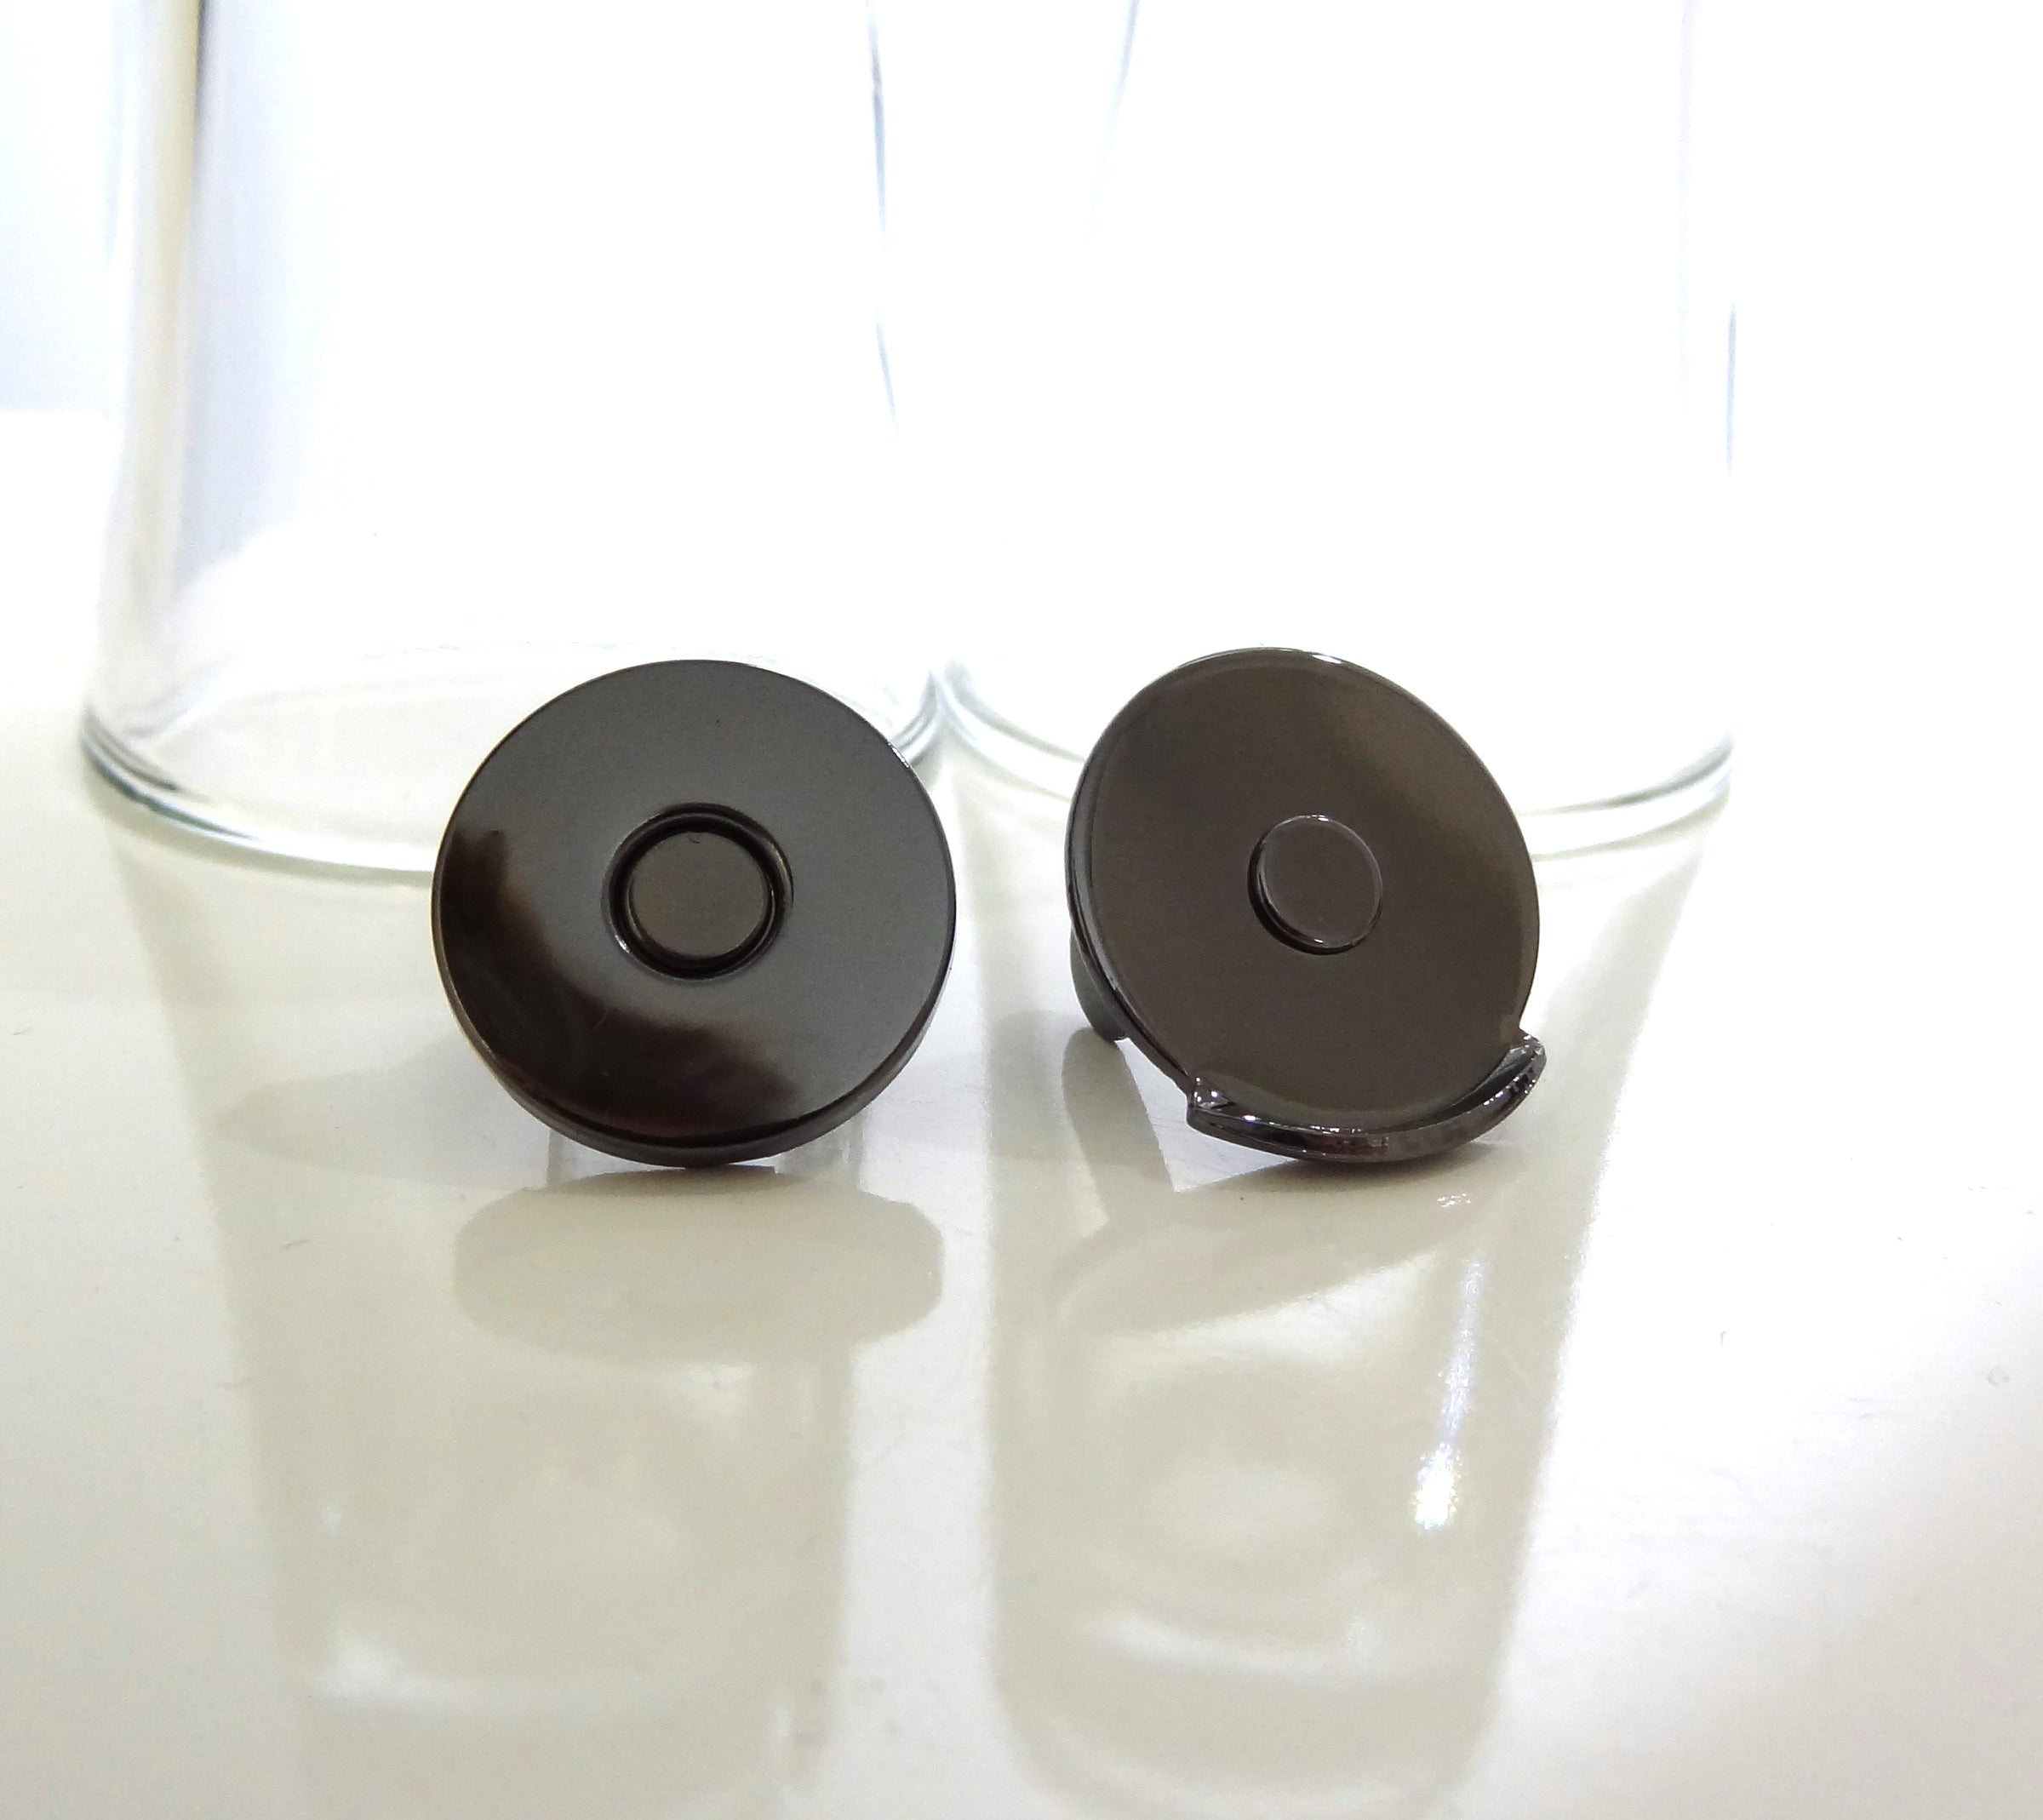 Magnetic Snap Closures: 3/4 (18 mm) SLIM (2 Pack)